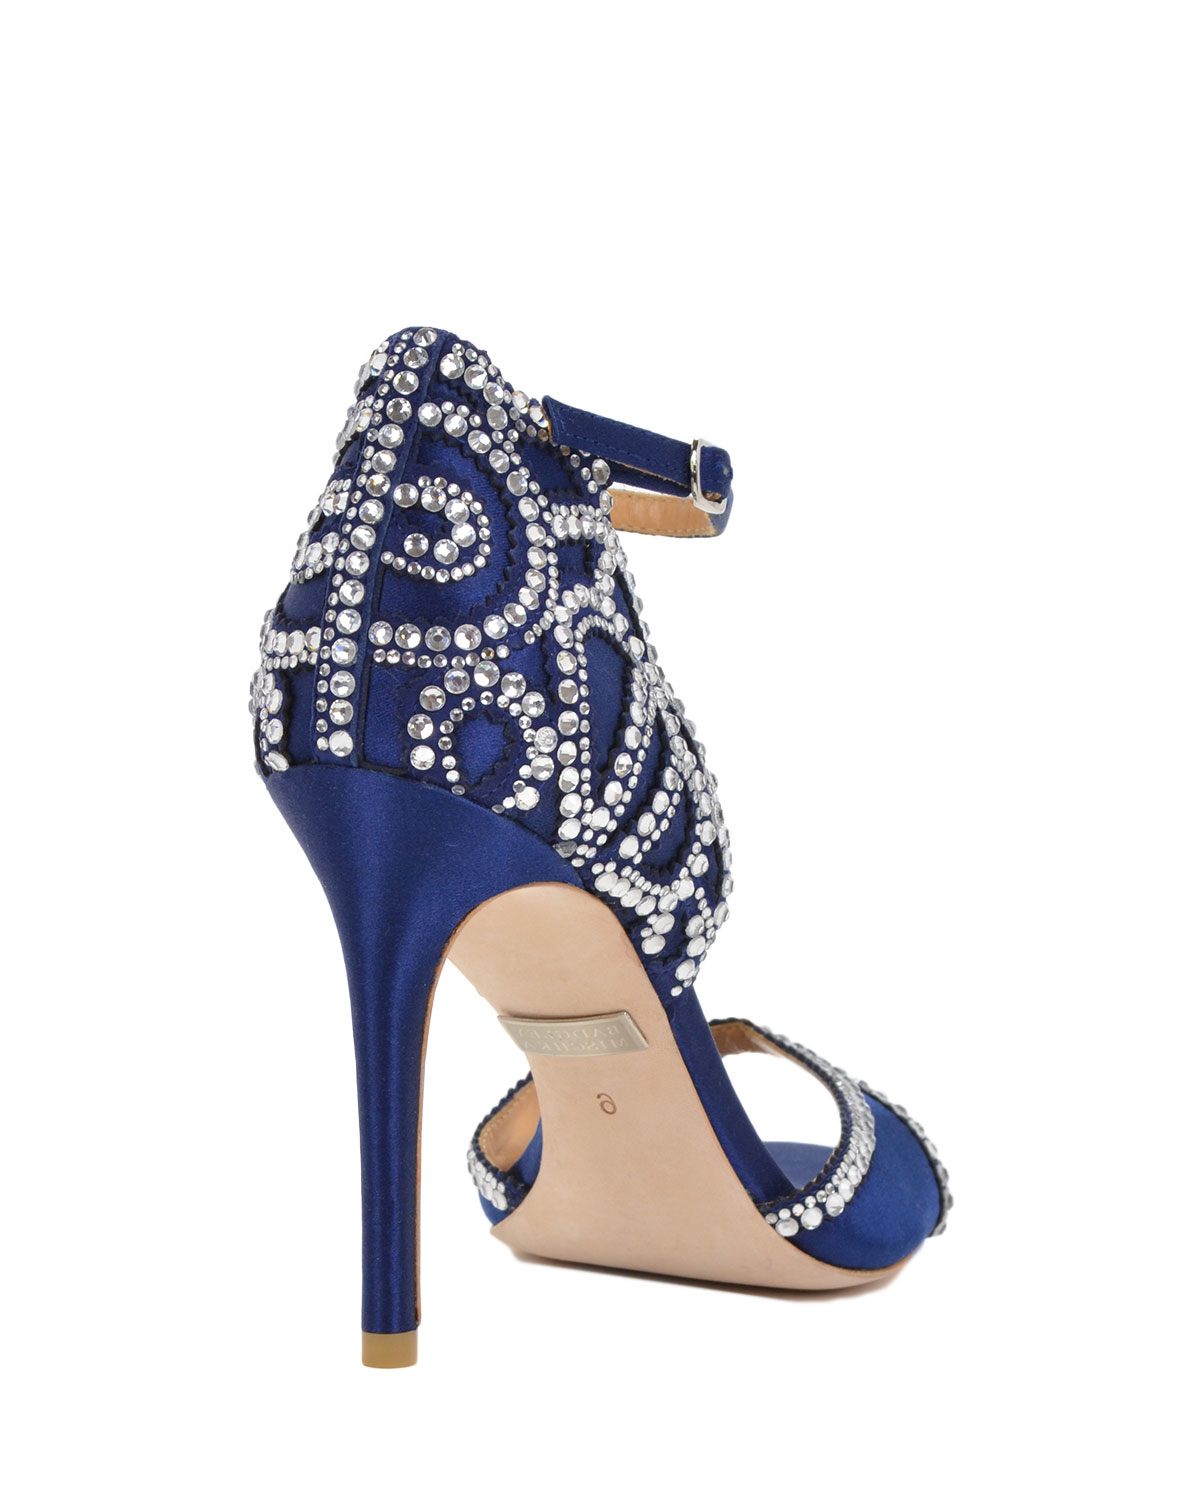 Badgley mischka Roxy Ankle Strap Evening Shoe in Blue (Navy) | Lyst